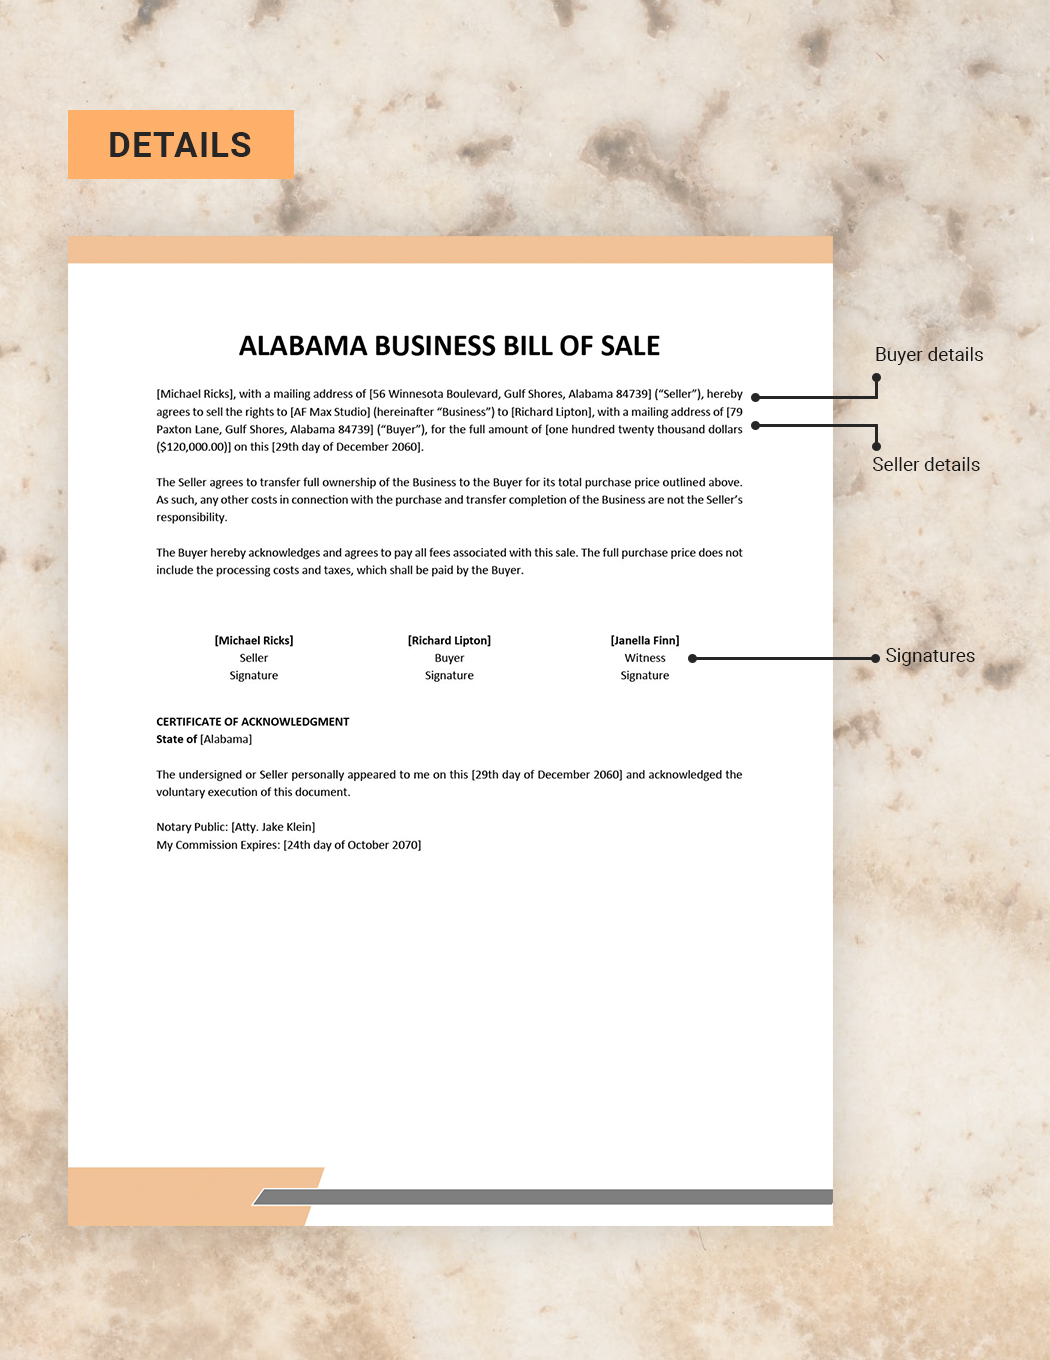 Alabama Business Bill of Sale Template